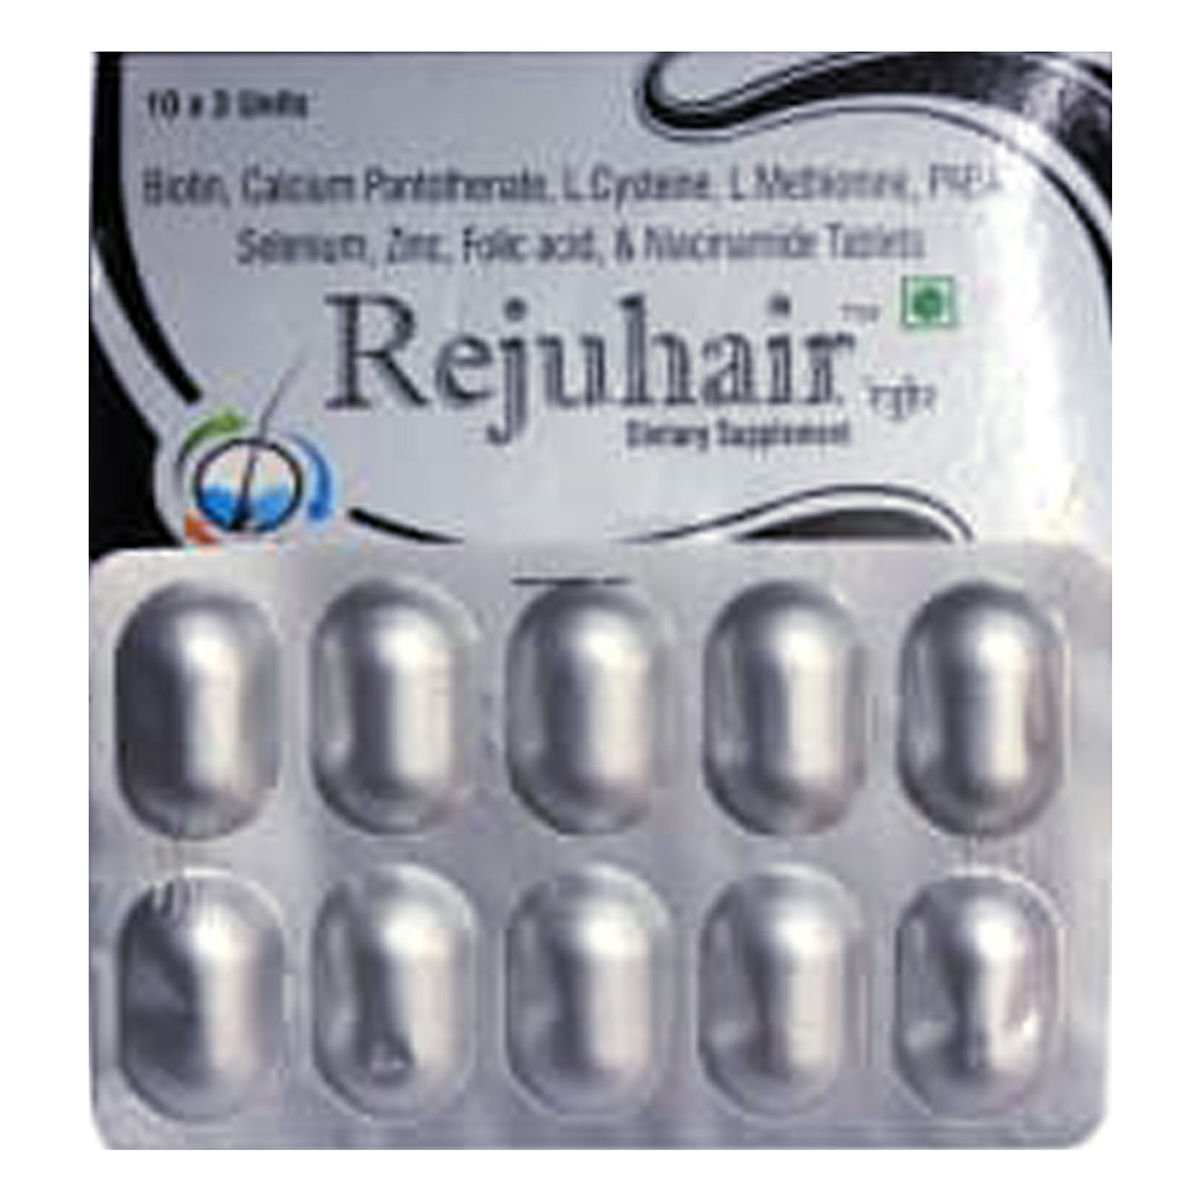 Buy Rejuhair, 10 Tablets Online